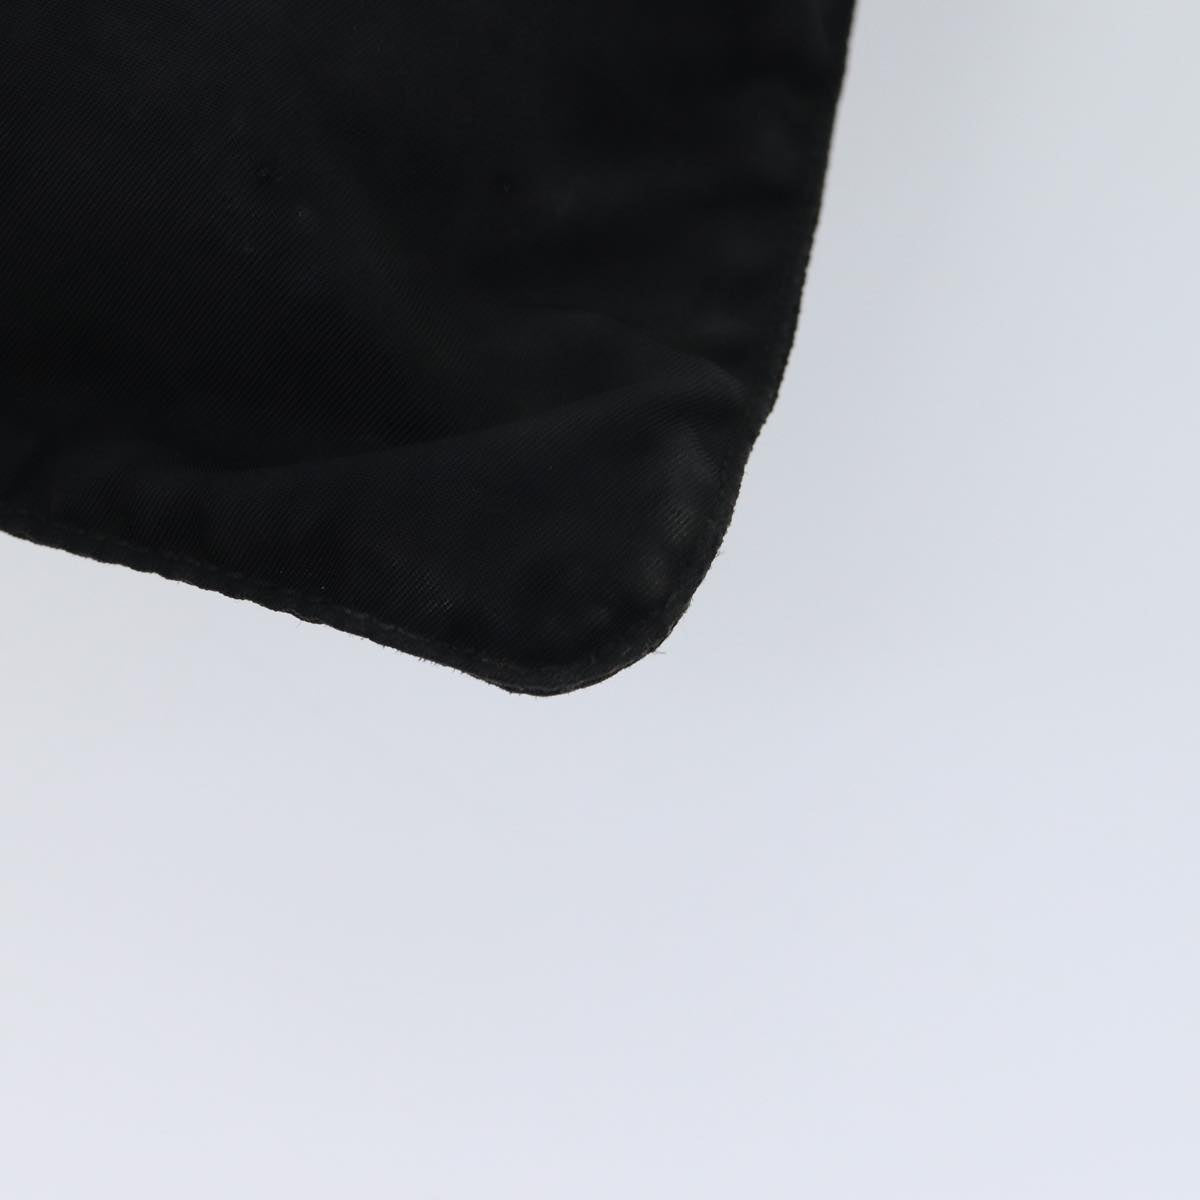 PRADA Shoulder Bag Nylon Black Auth yk11448